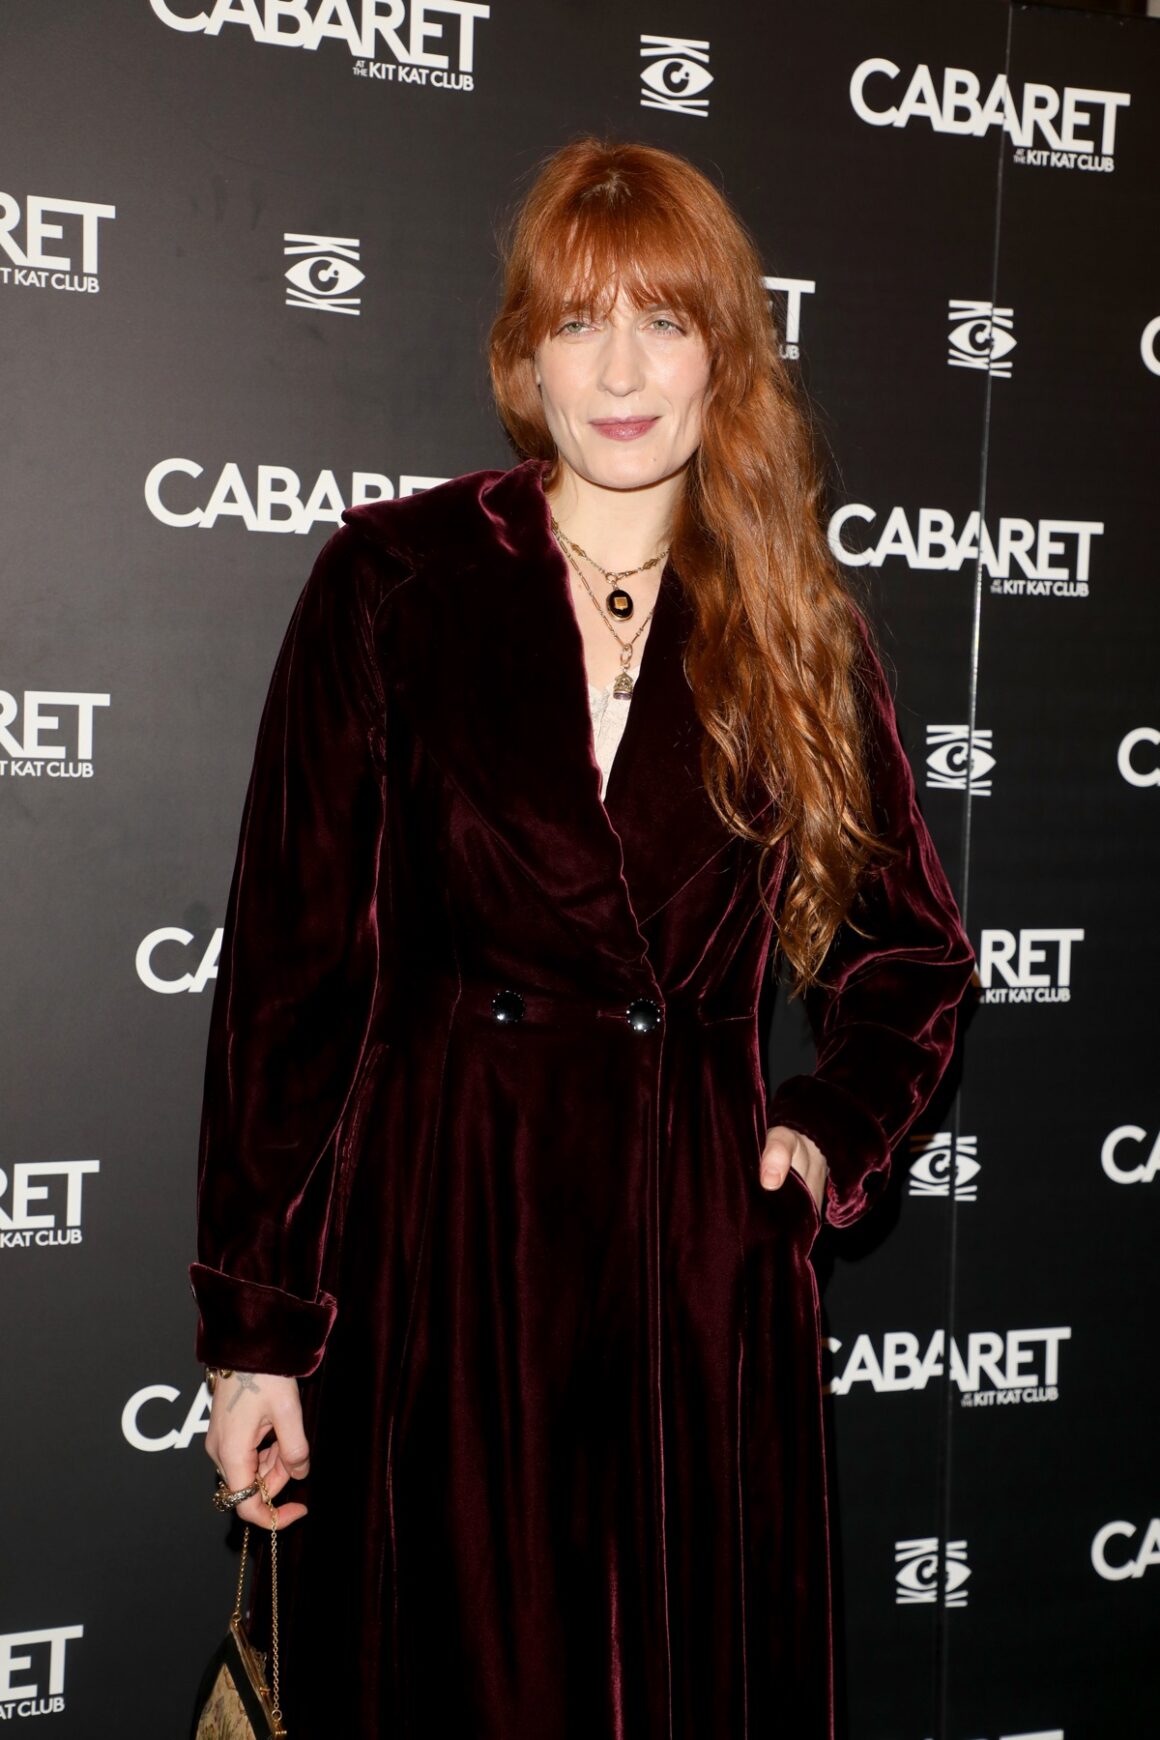 Florence Welch "Cabaret" Red Carpet Gala Night - Arrivals